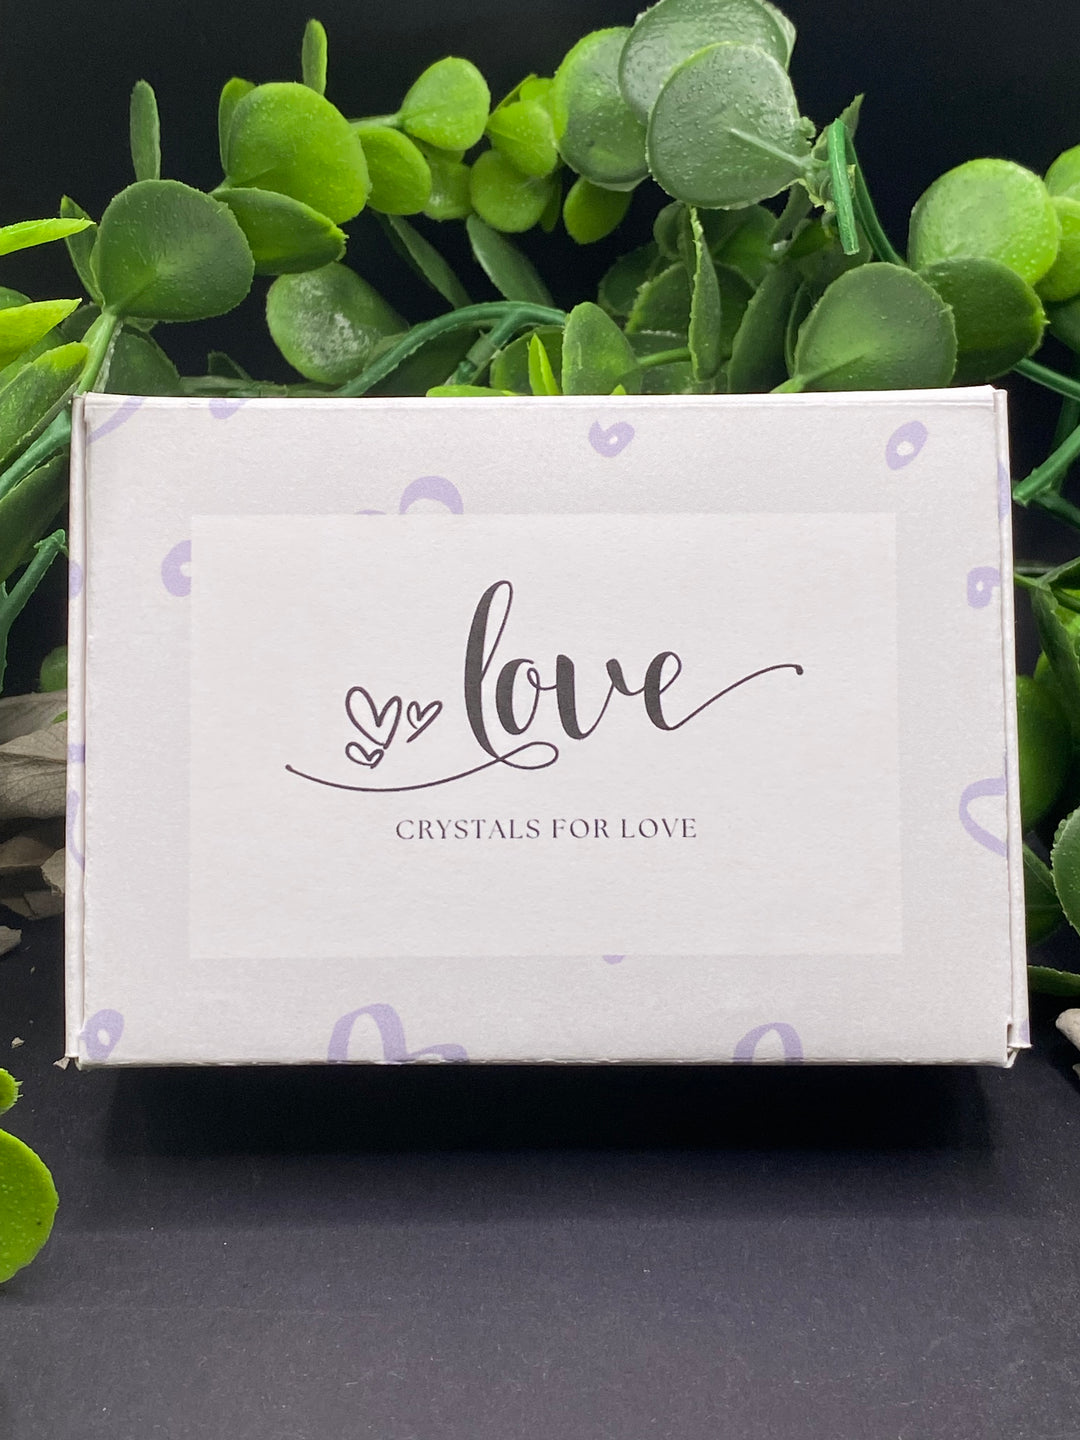 Love Crystal Kit